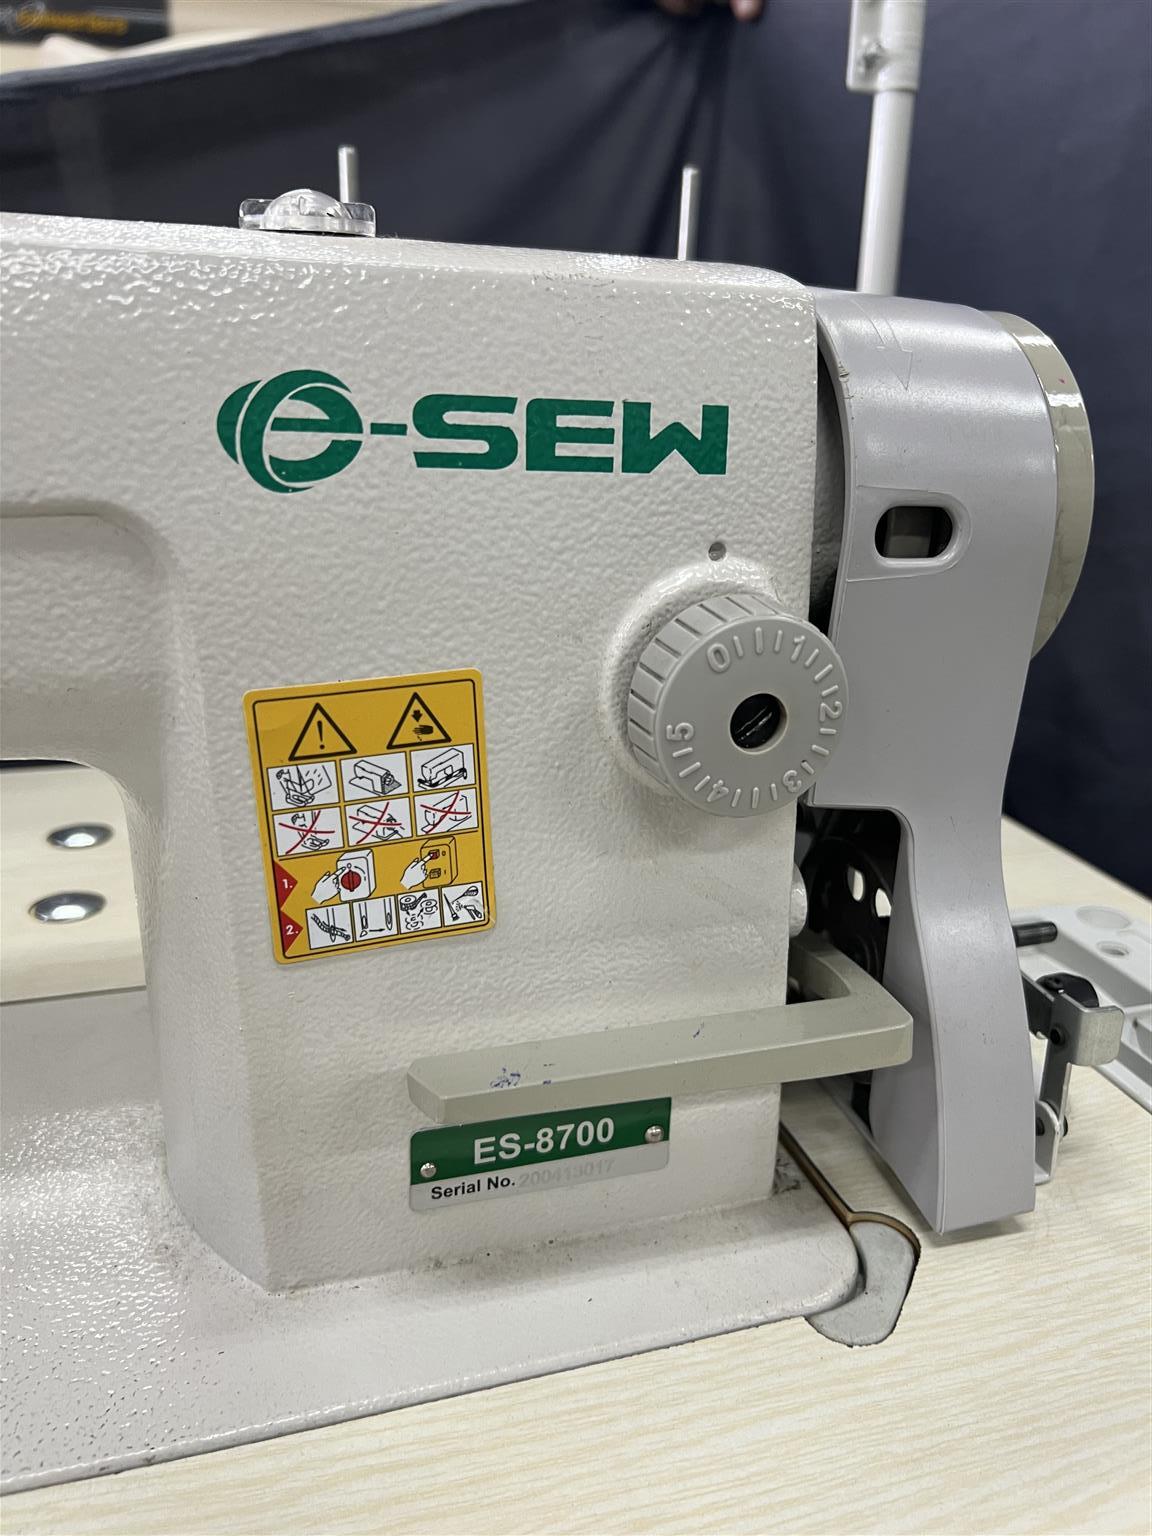 Industrial Sewing Machine ES-8700 E Sew - C033064452-1